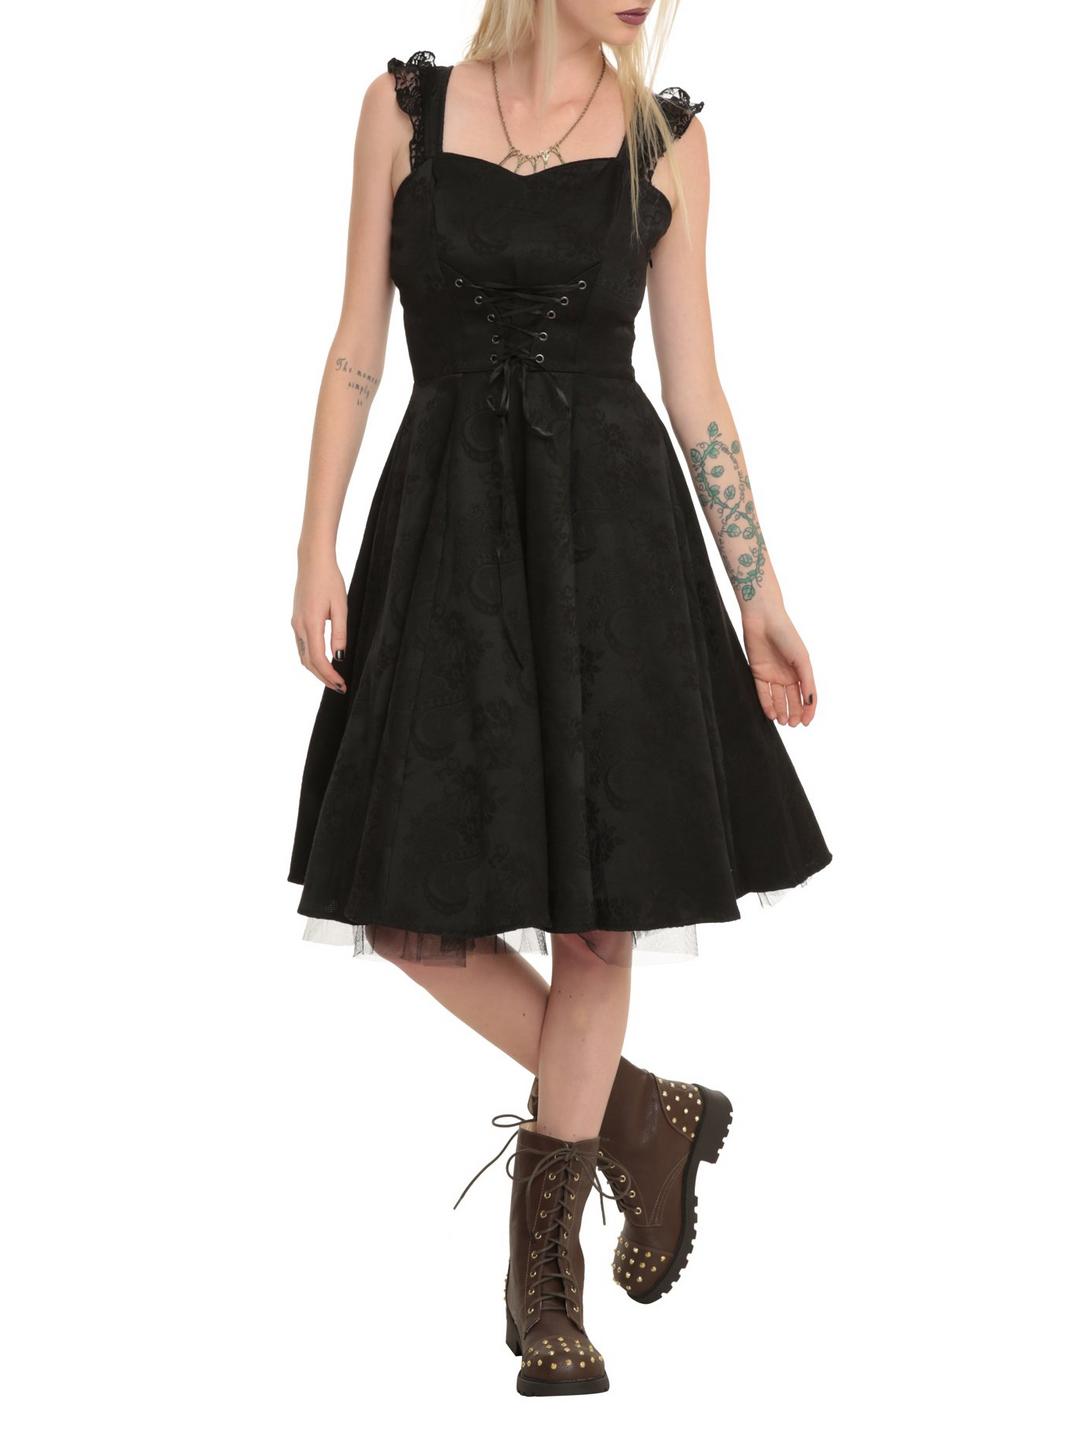 Black Brocade Lace-Up Dress, BLACK, hi-res